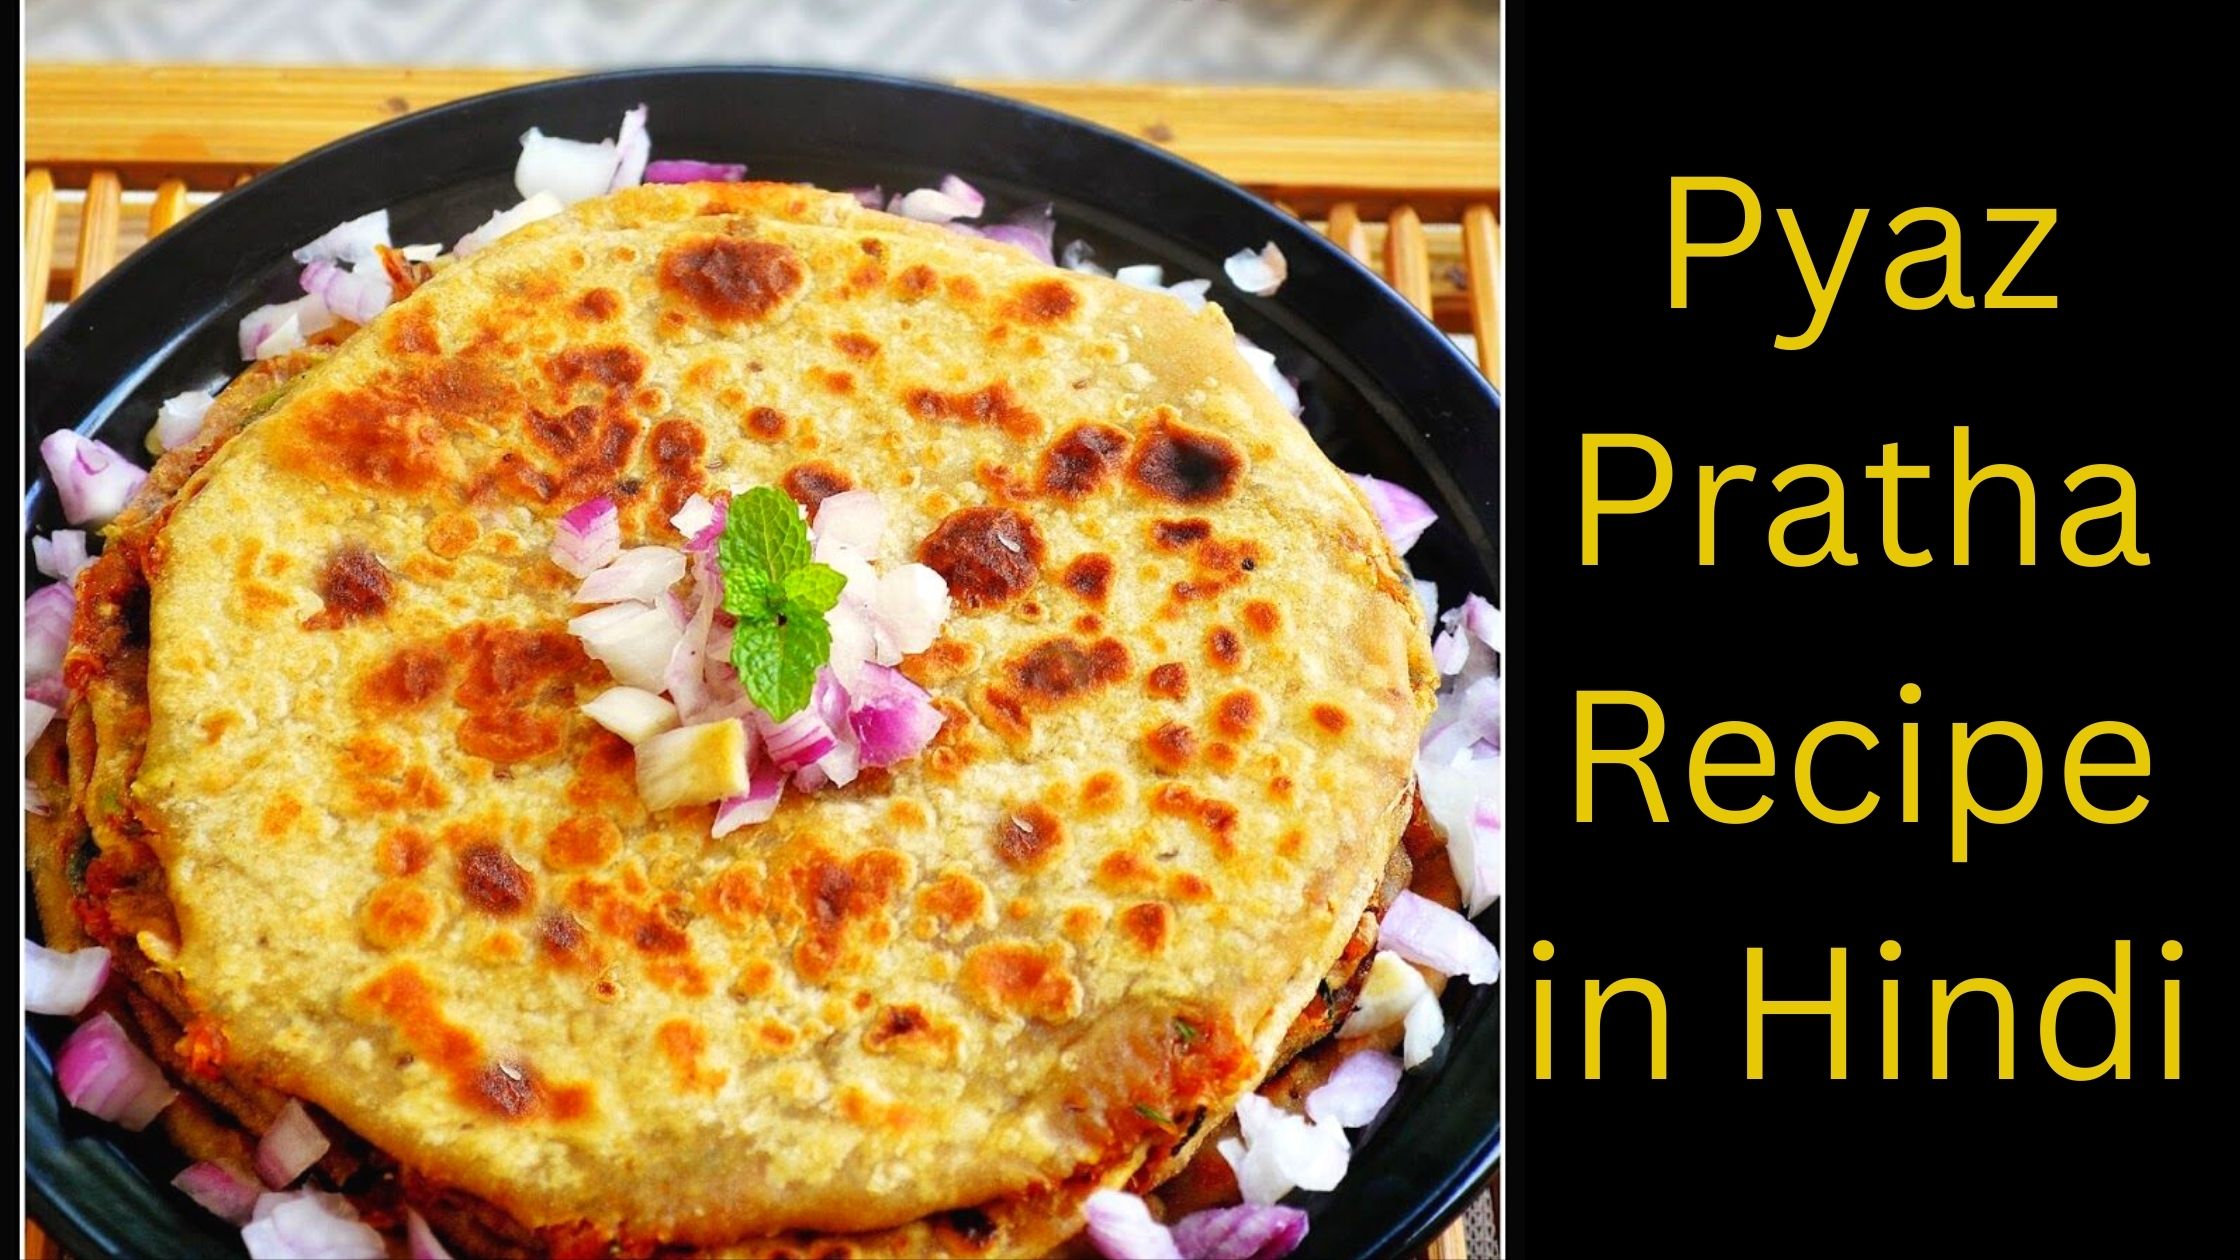 Pyaz Pratha Recipe in Hindi